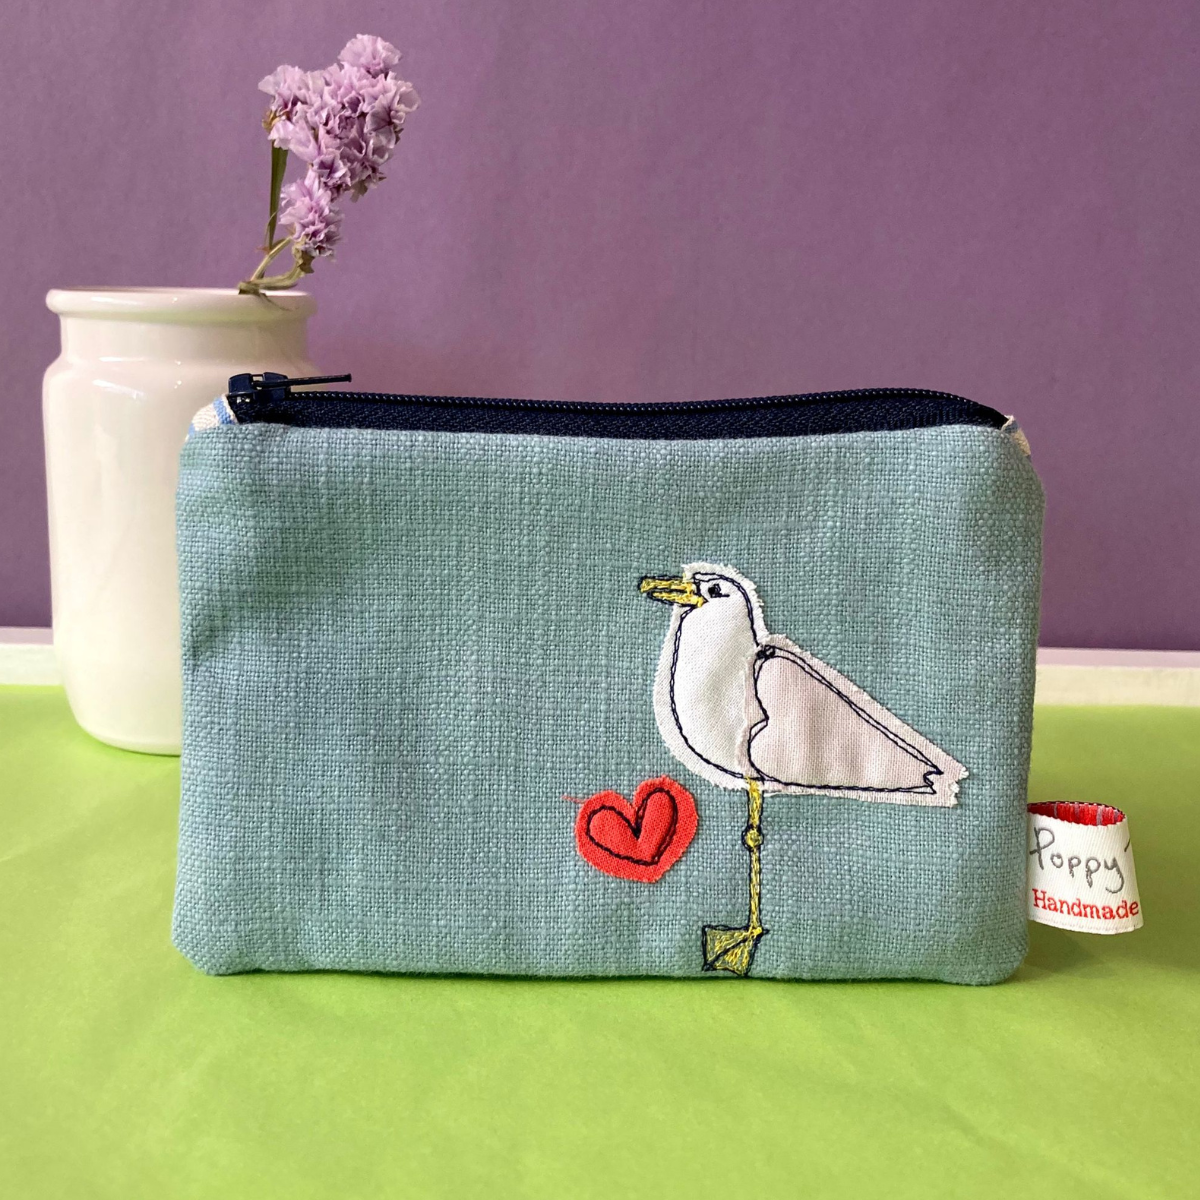 Embroidered seagull purse